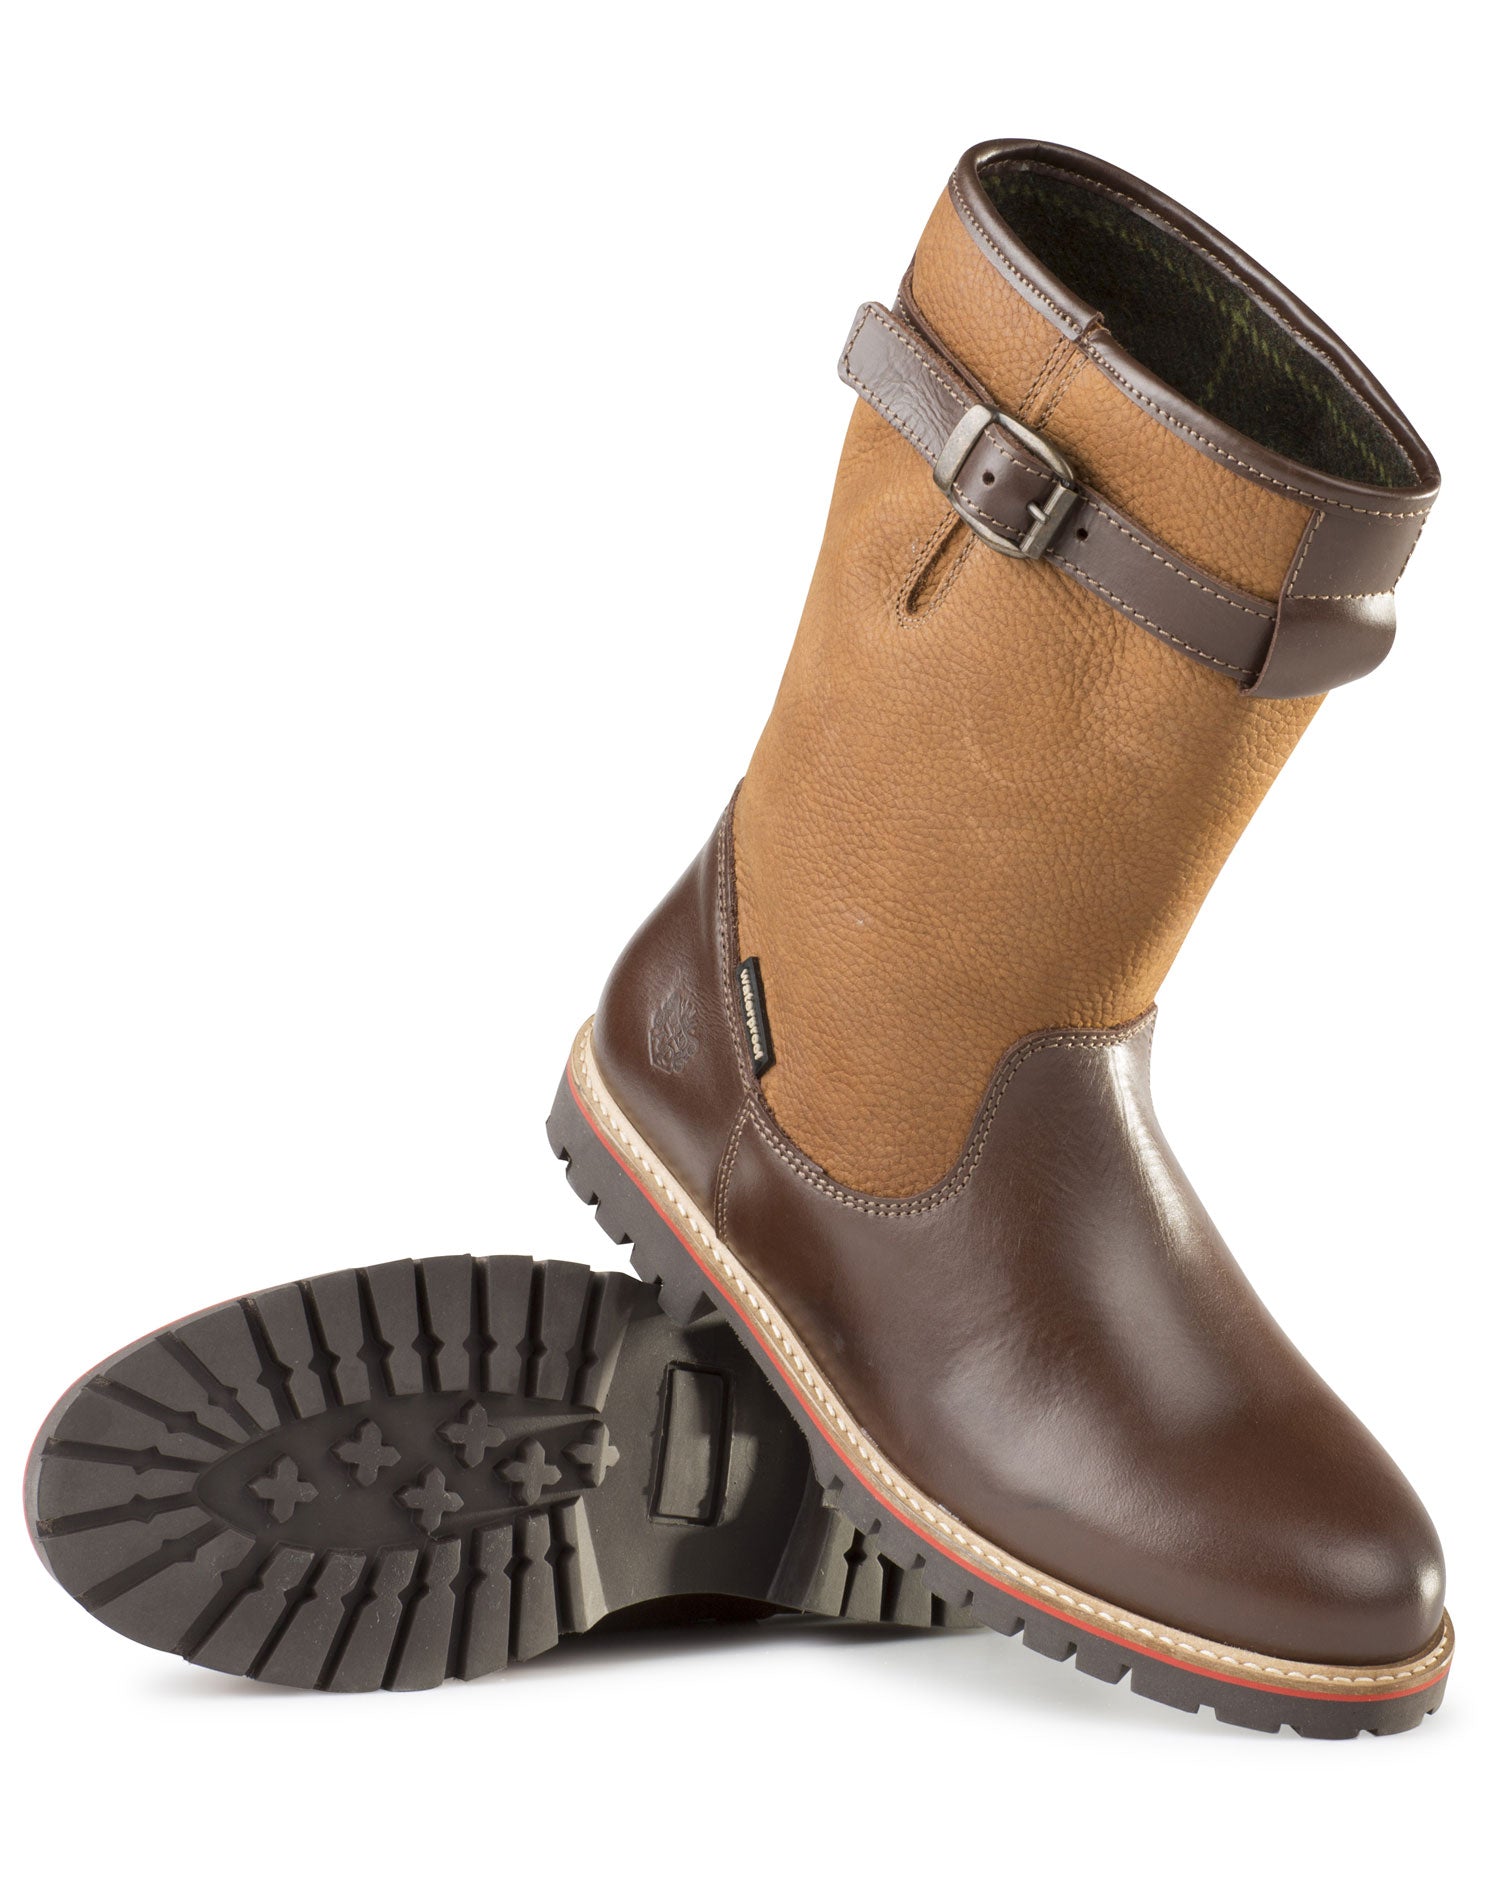 waterproof leather boots ladies